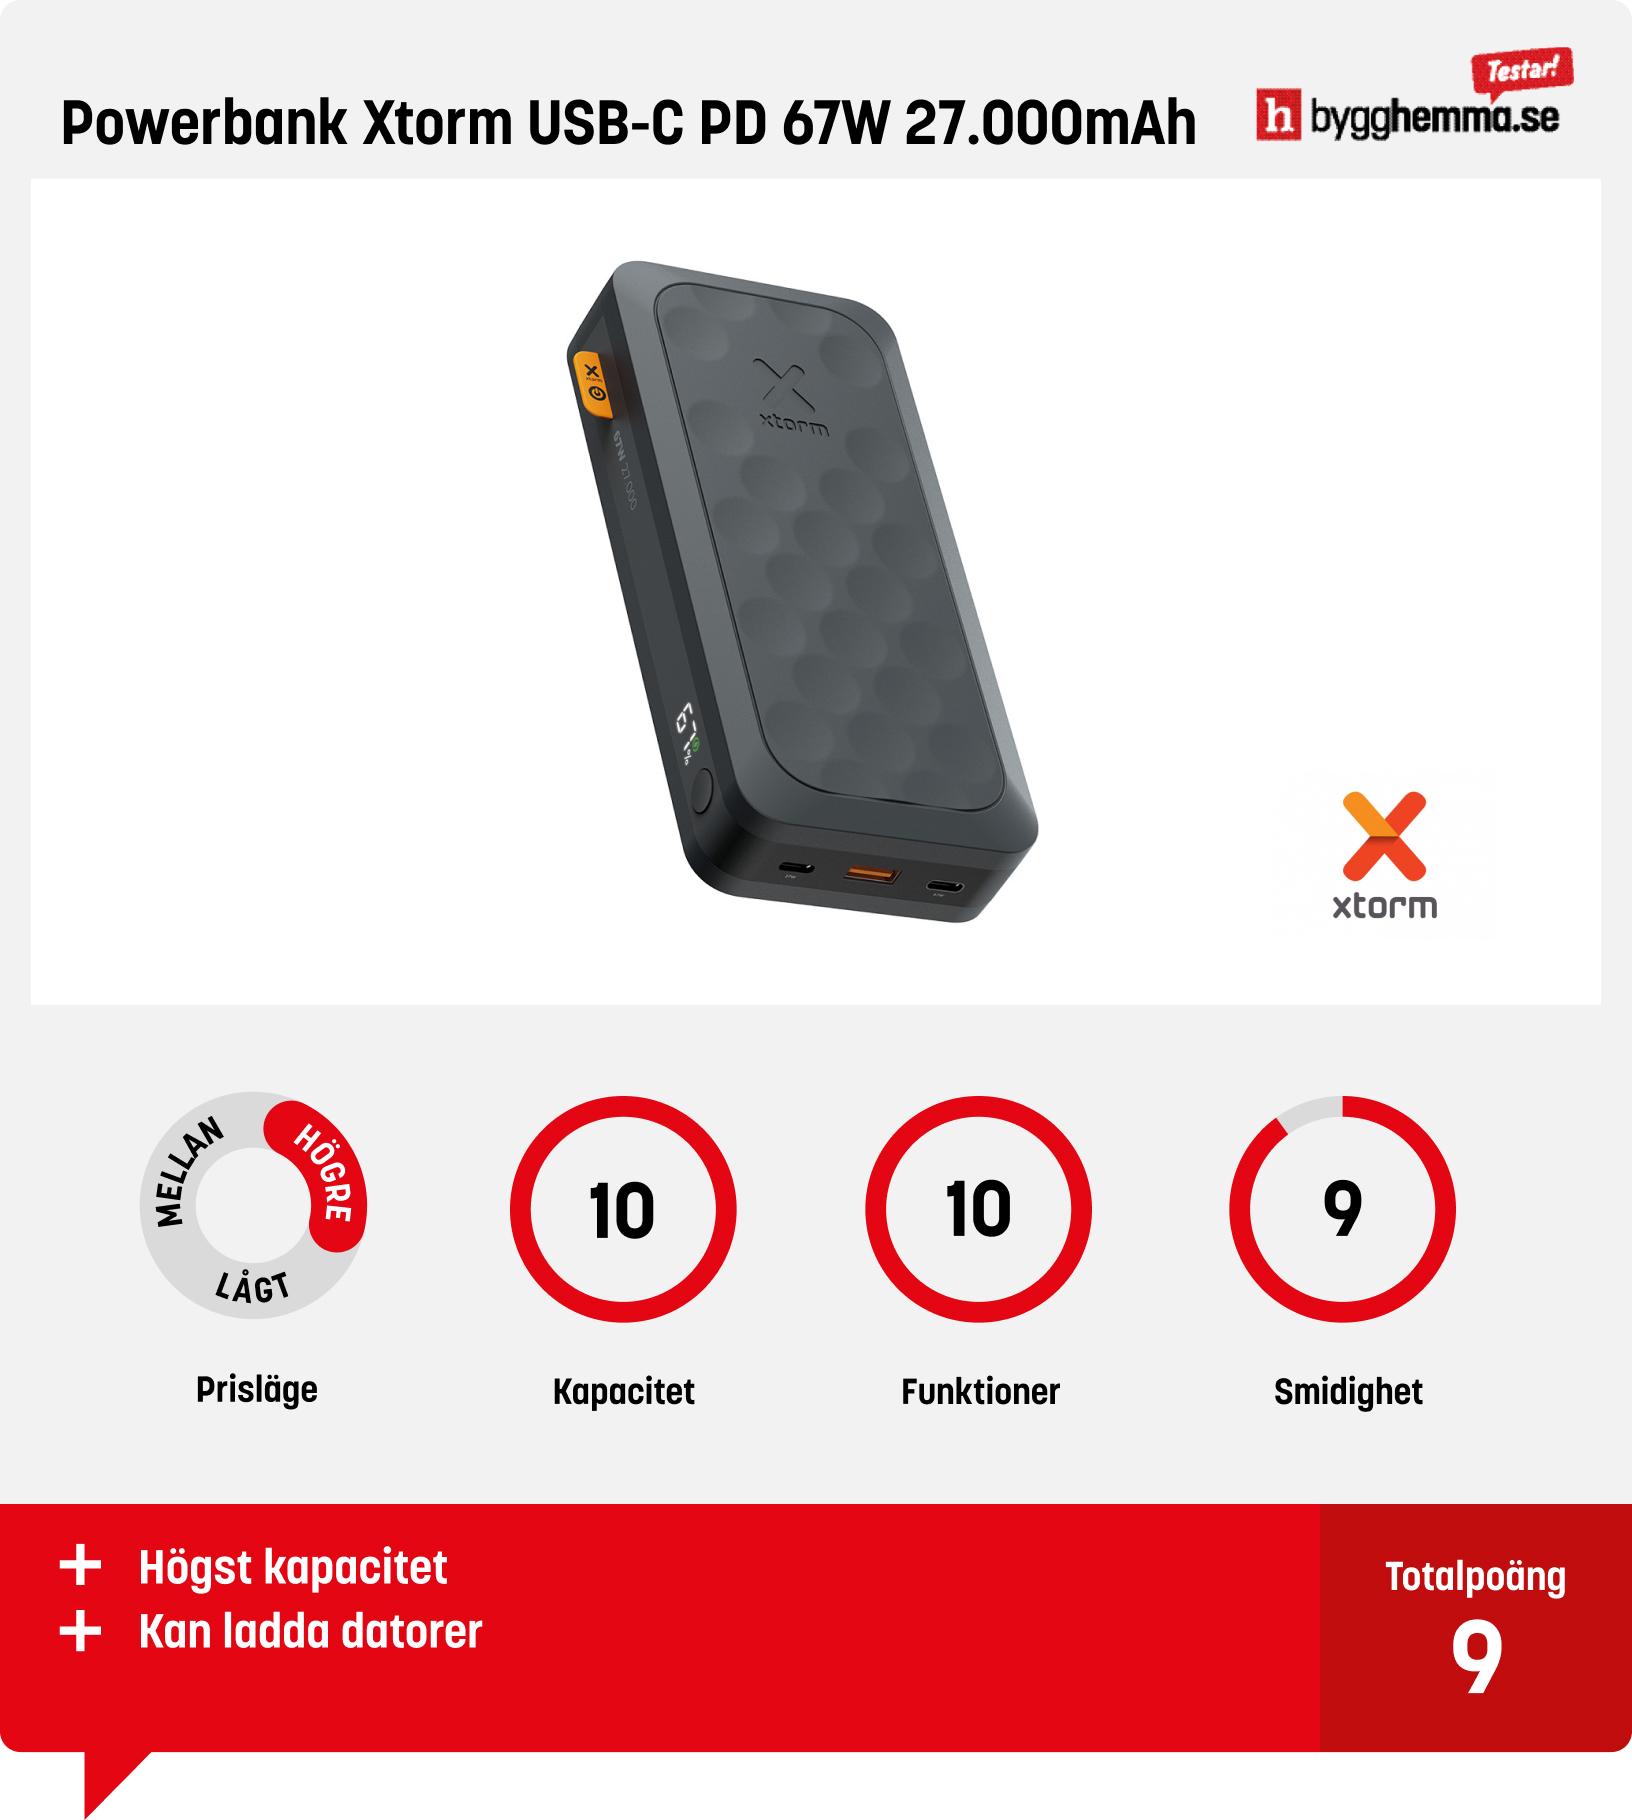 Powerbank bäst i test - Powerbank Xtorm USB-C PD 67W 27.000mAh